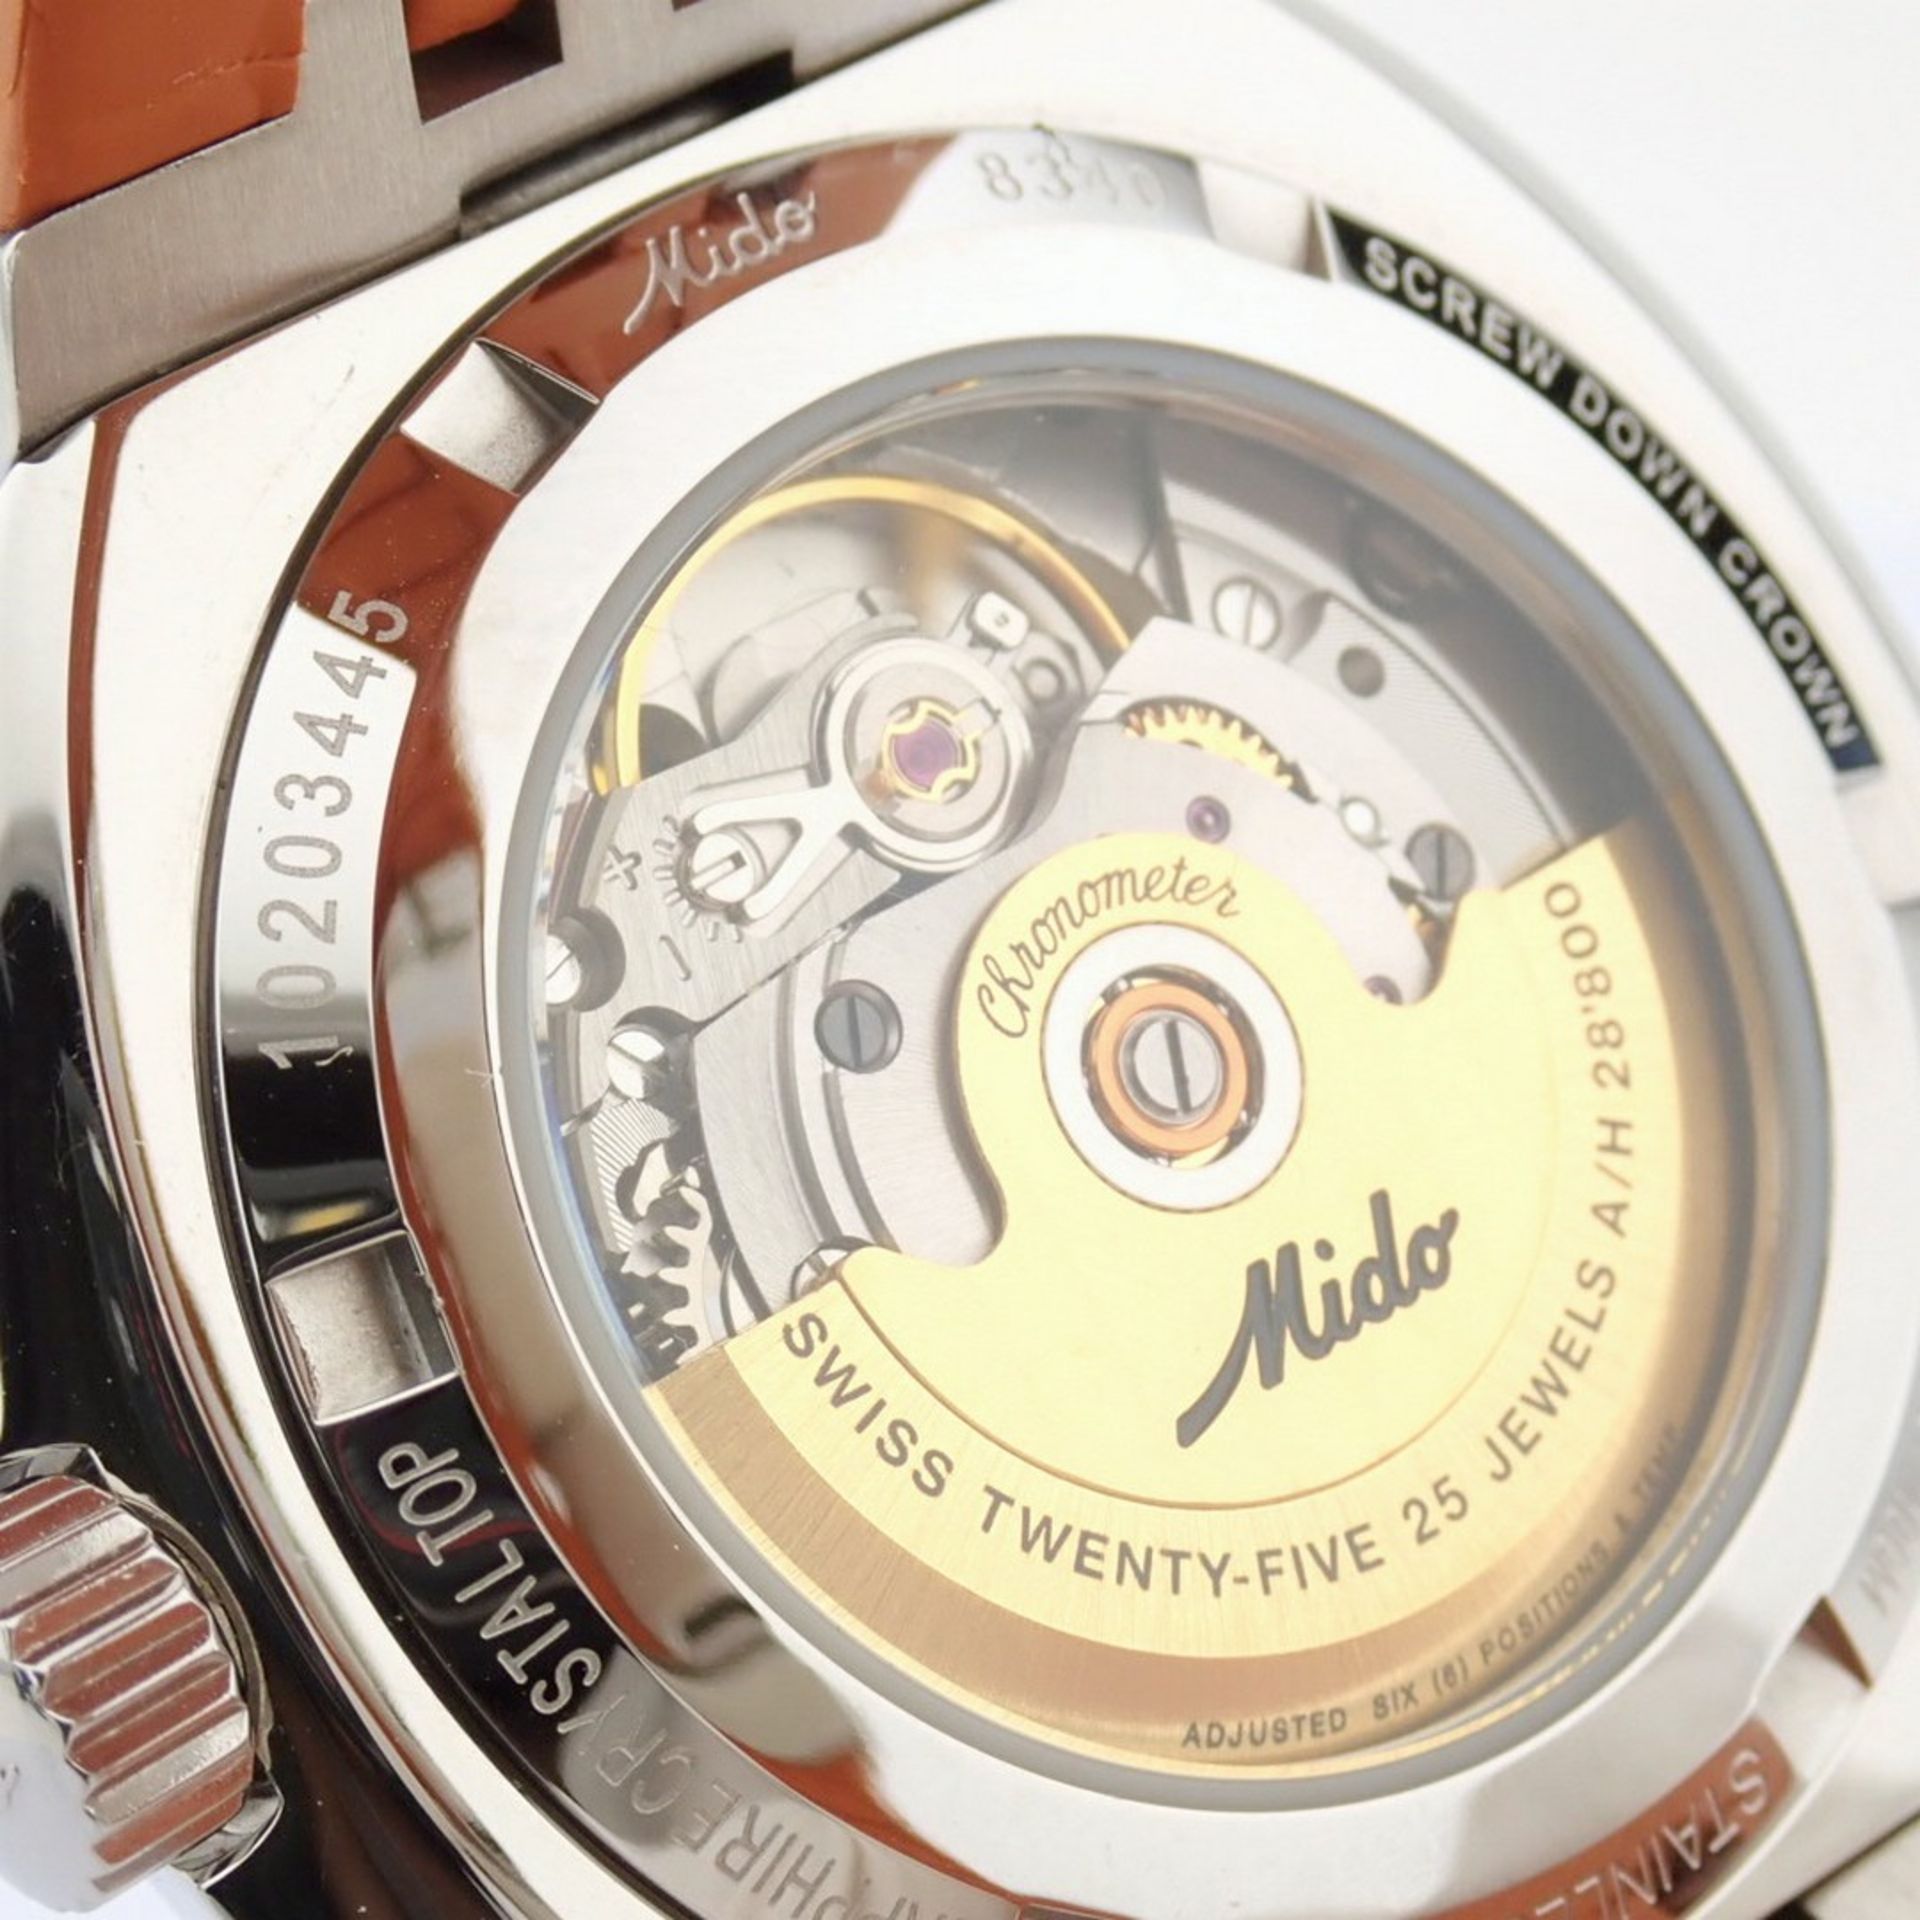 Mido / All Dial Day Date Choronometer Automatic Transparent (Unworn) - Gentlmen's Steel Wrist Watch - Image 11 of 12